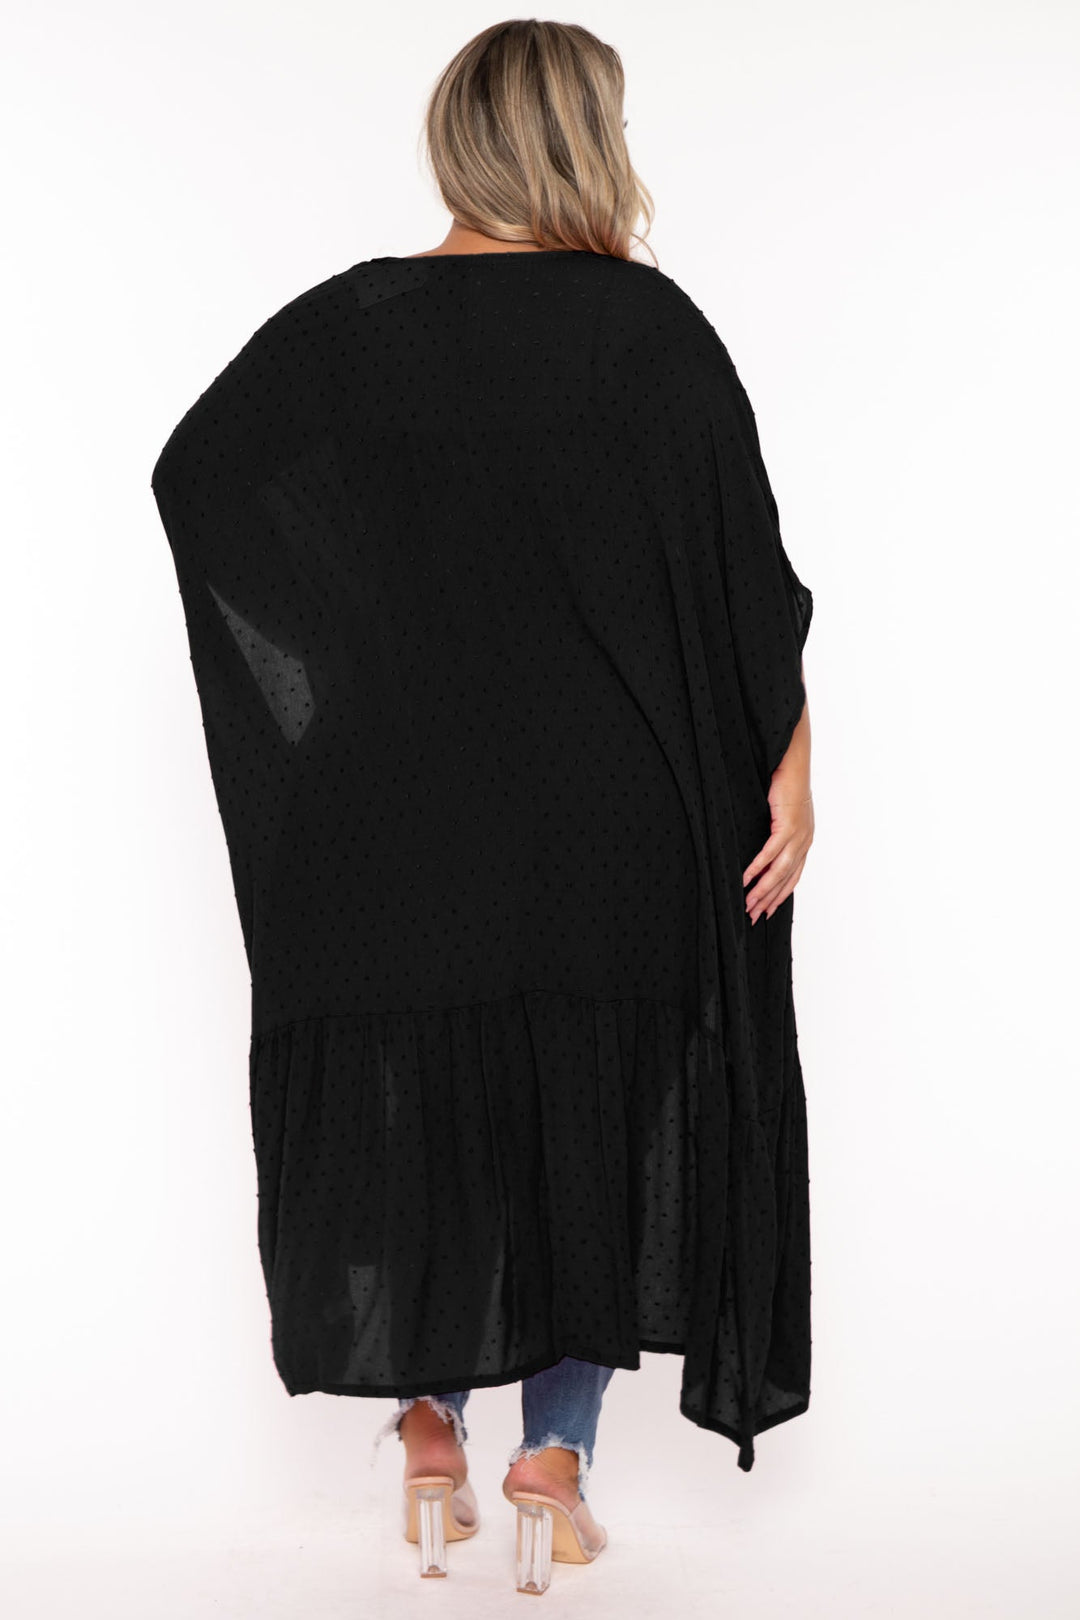 CULTURE CODE Tops One Size / Black Plus Size Swiss Dot Kimono  - Black